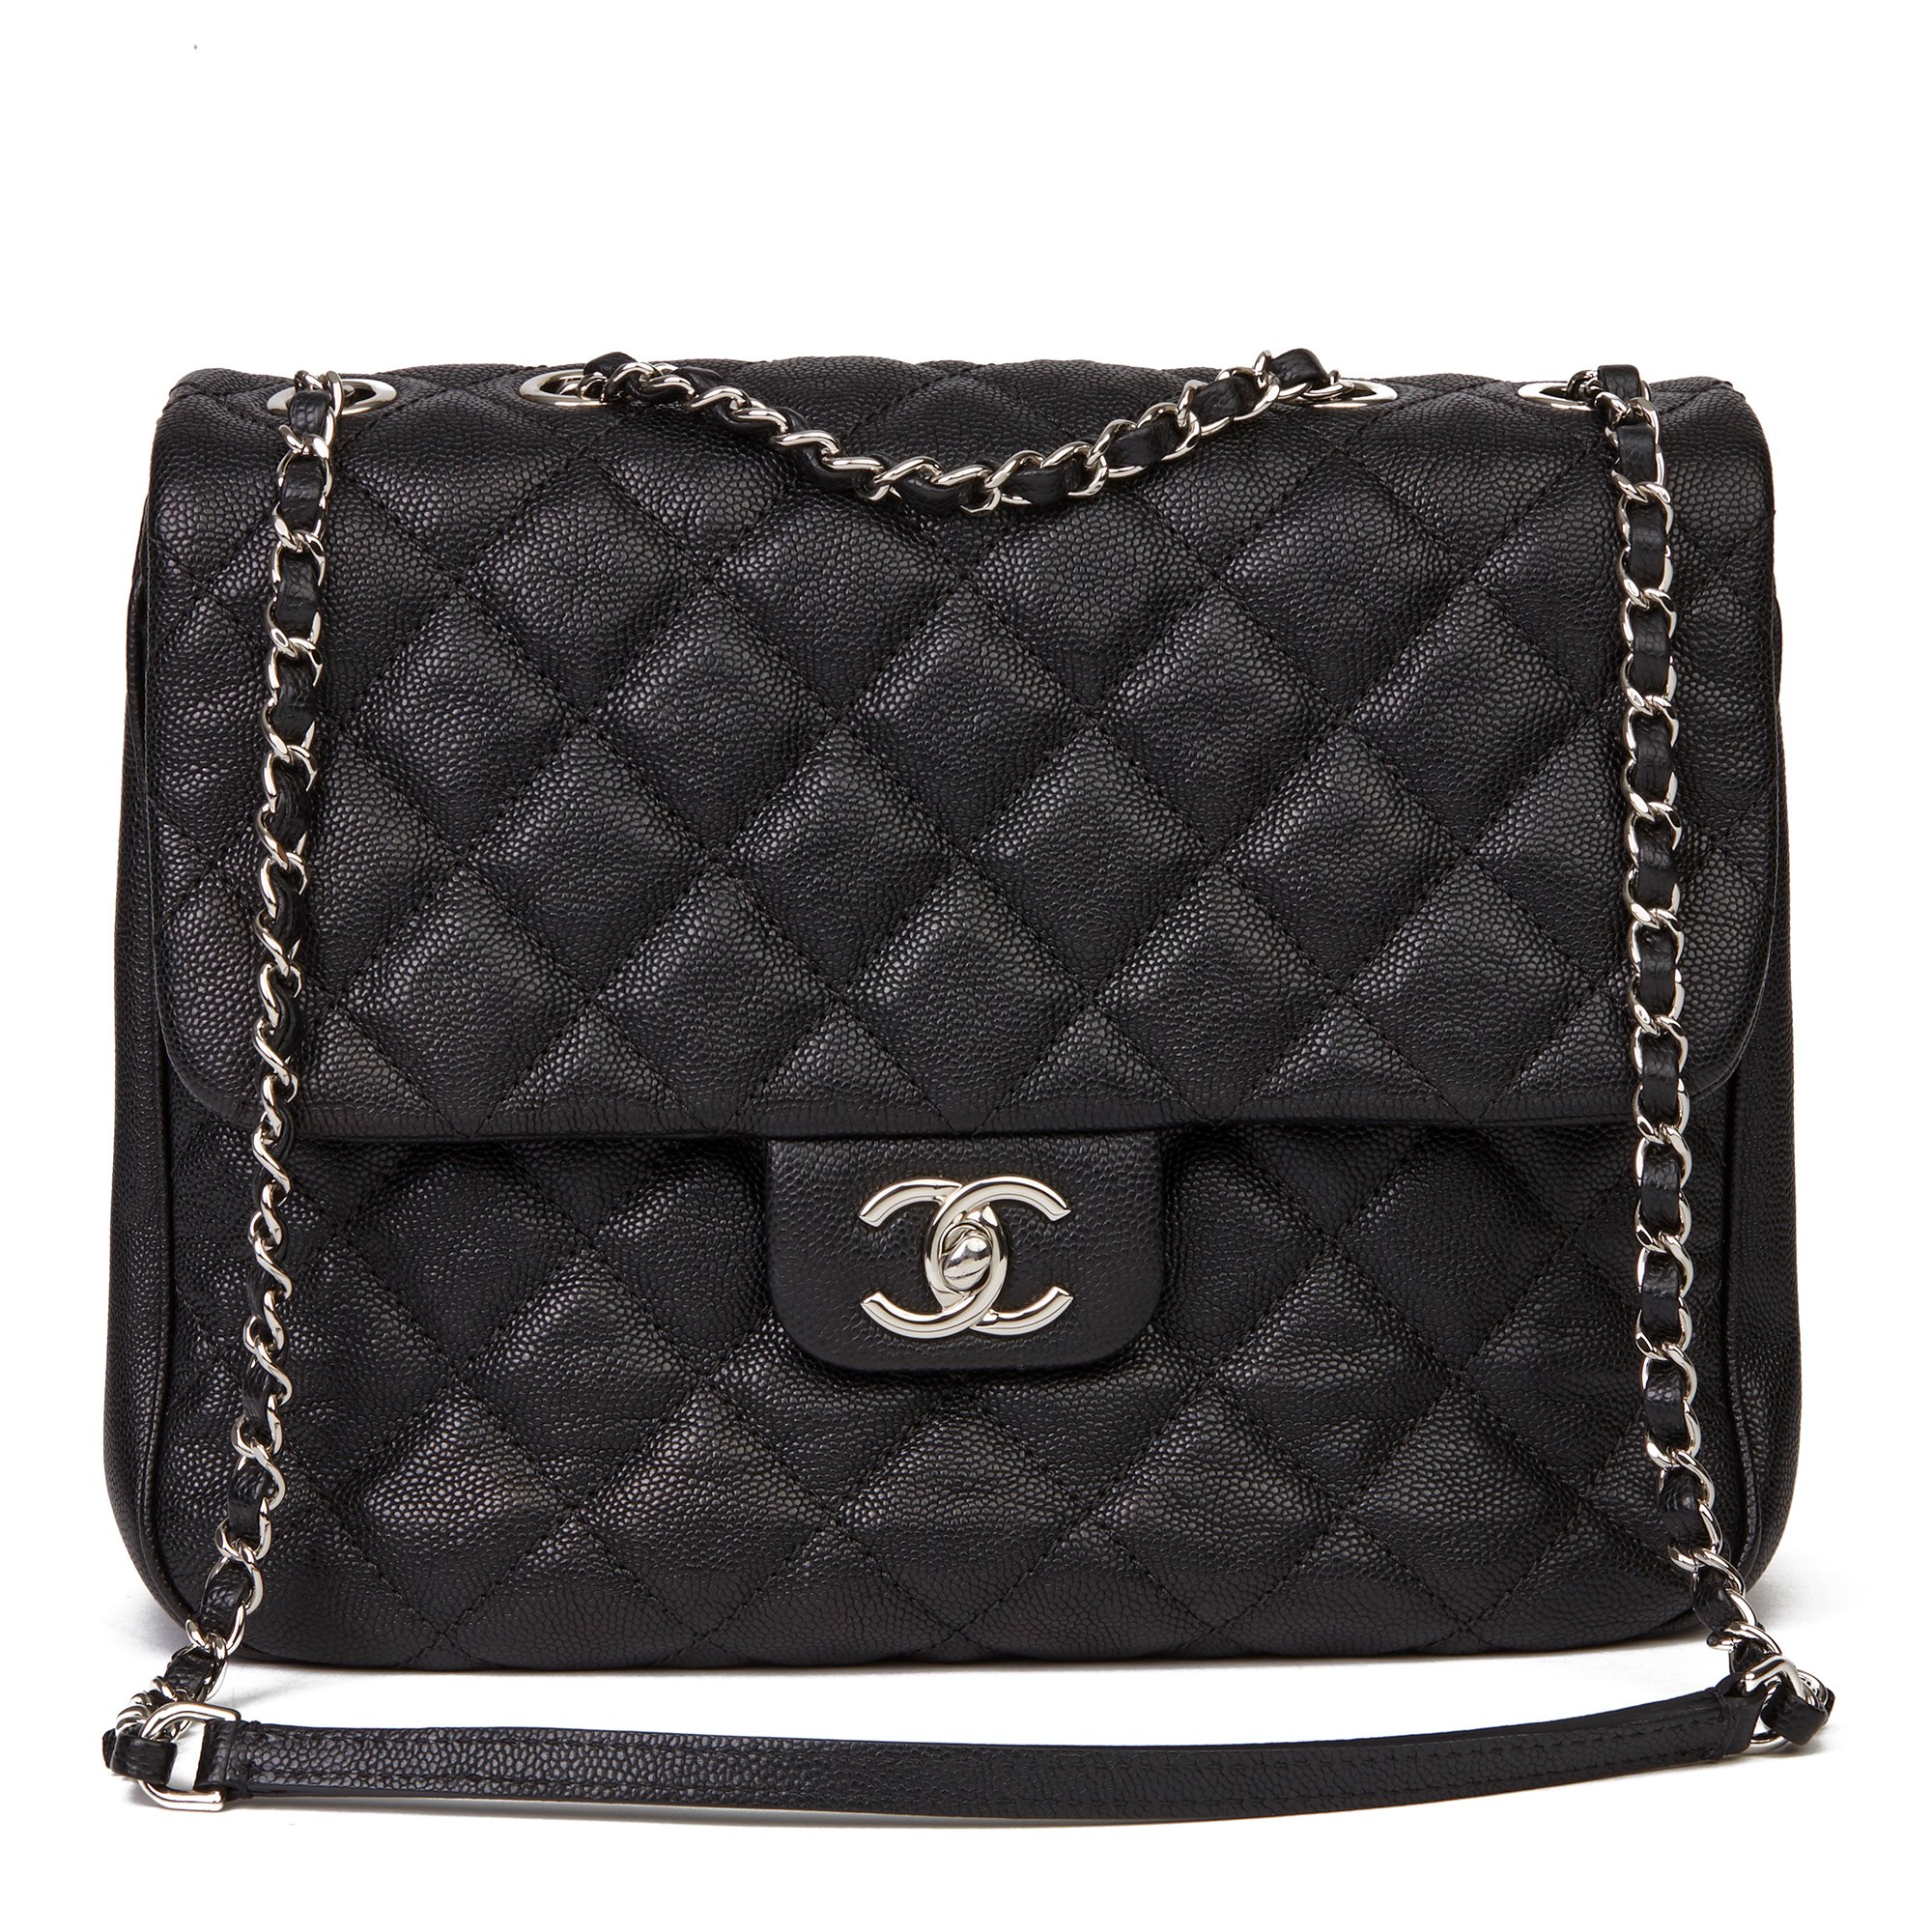 Chanel Handbags Uk Harrodsburg | semashow.com